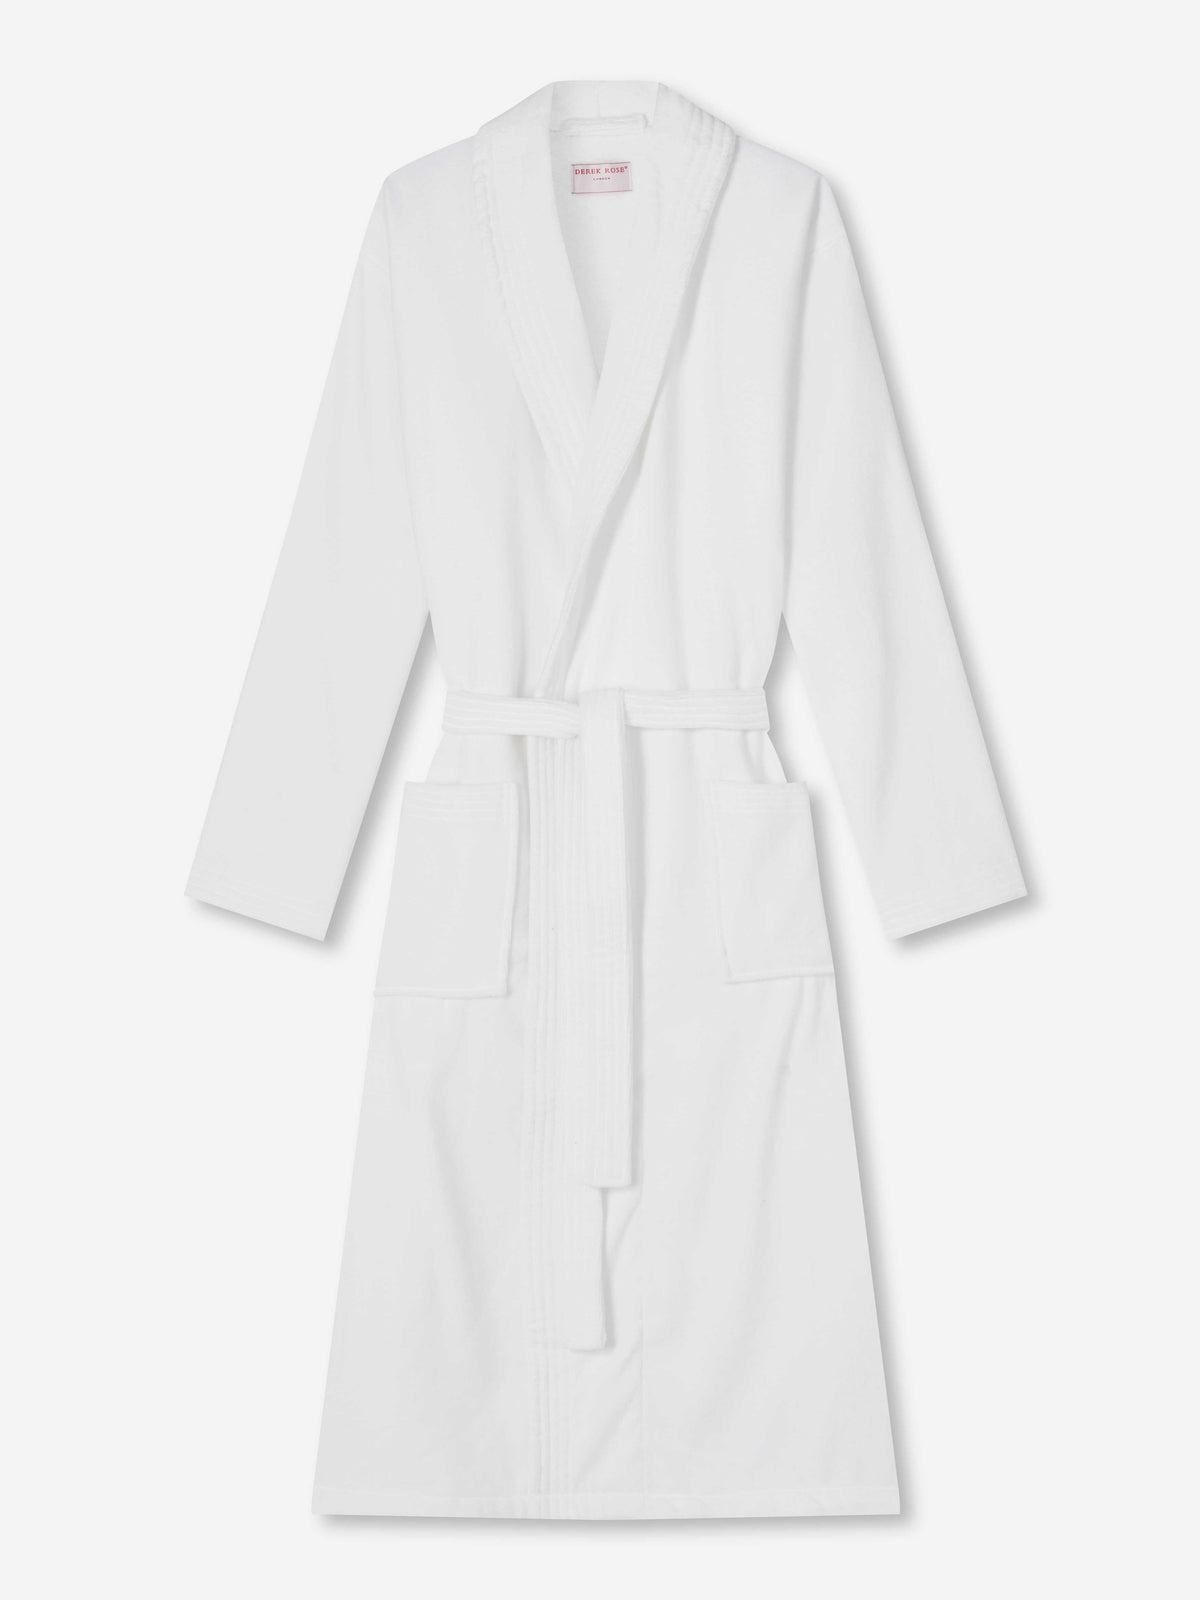 HANRO Robe Selection Melange Cotton Robe White, 50% OFF